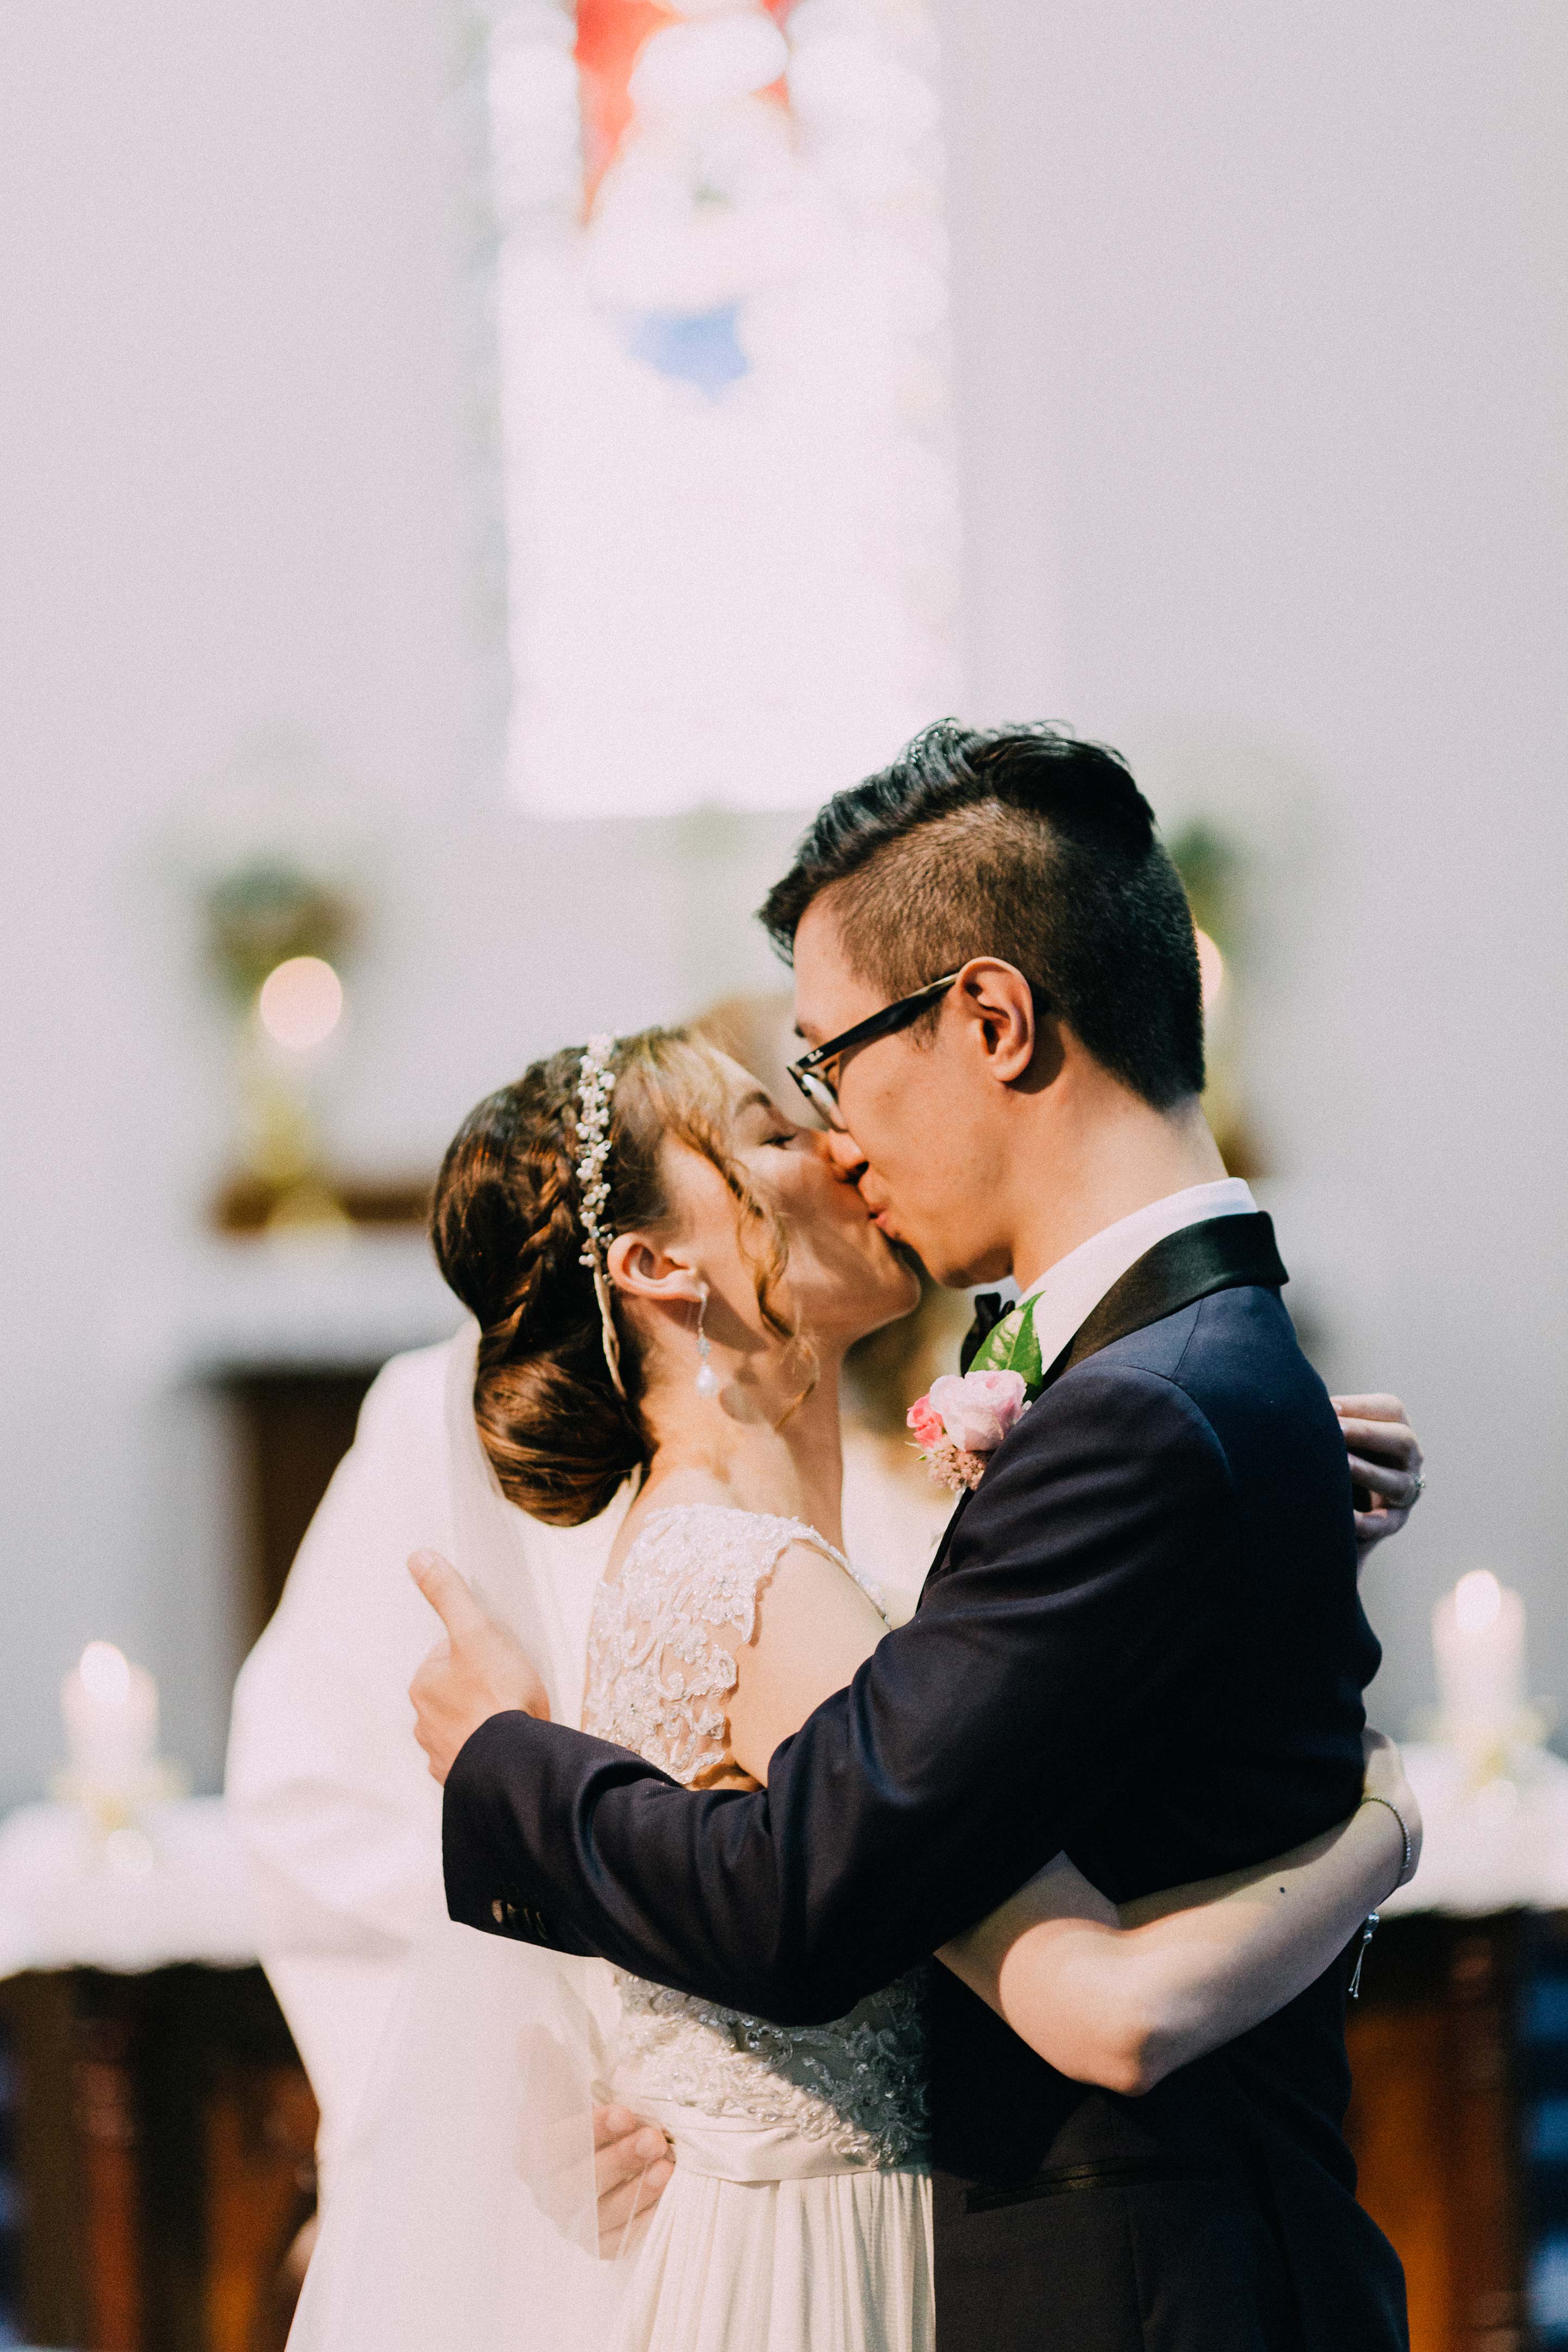 Melbourne-caufield-north-wedding-church-ceremony-kiss